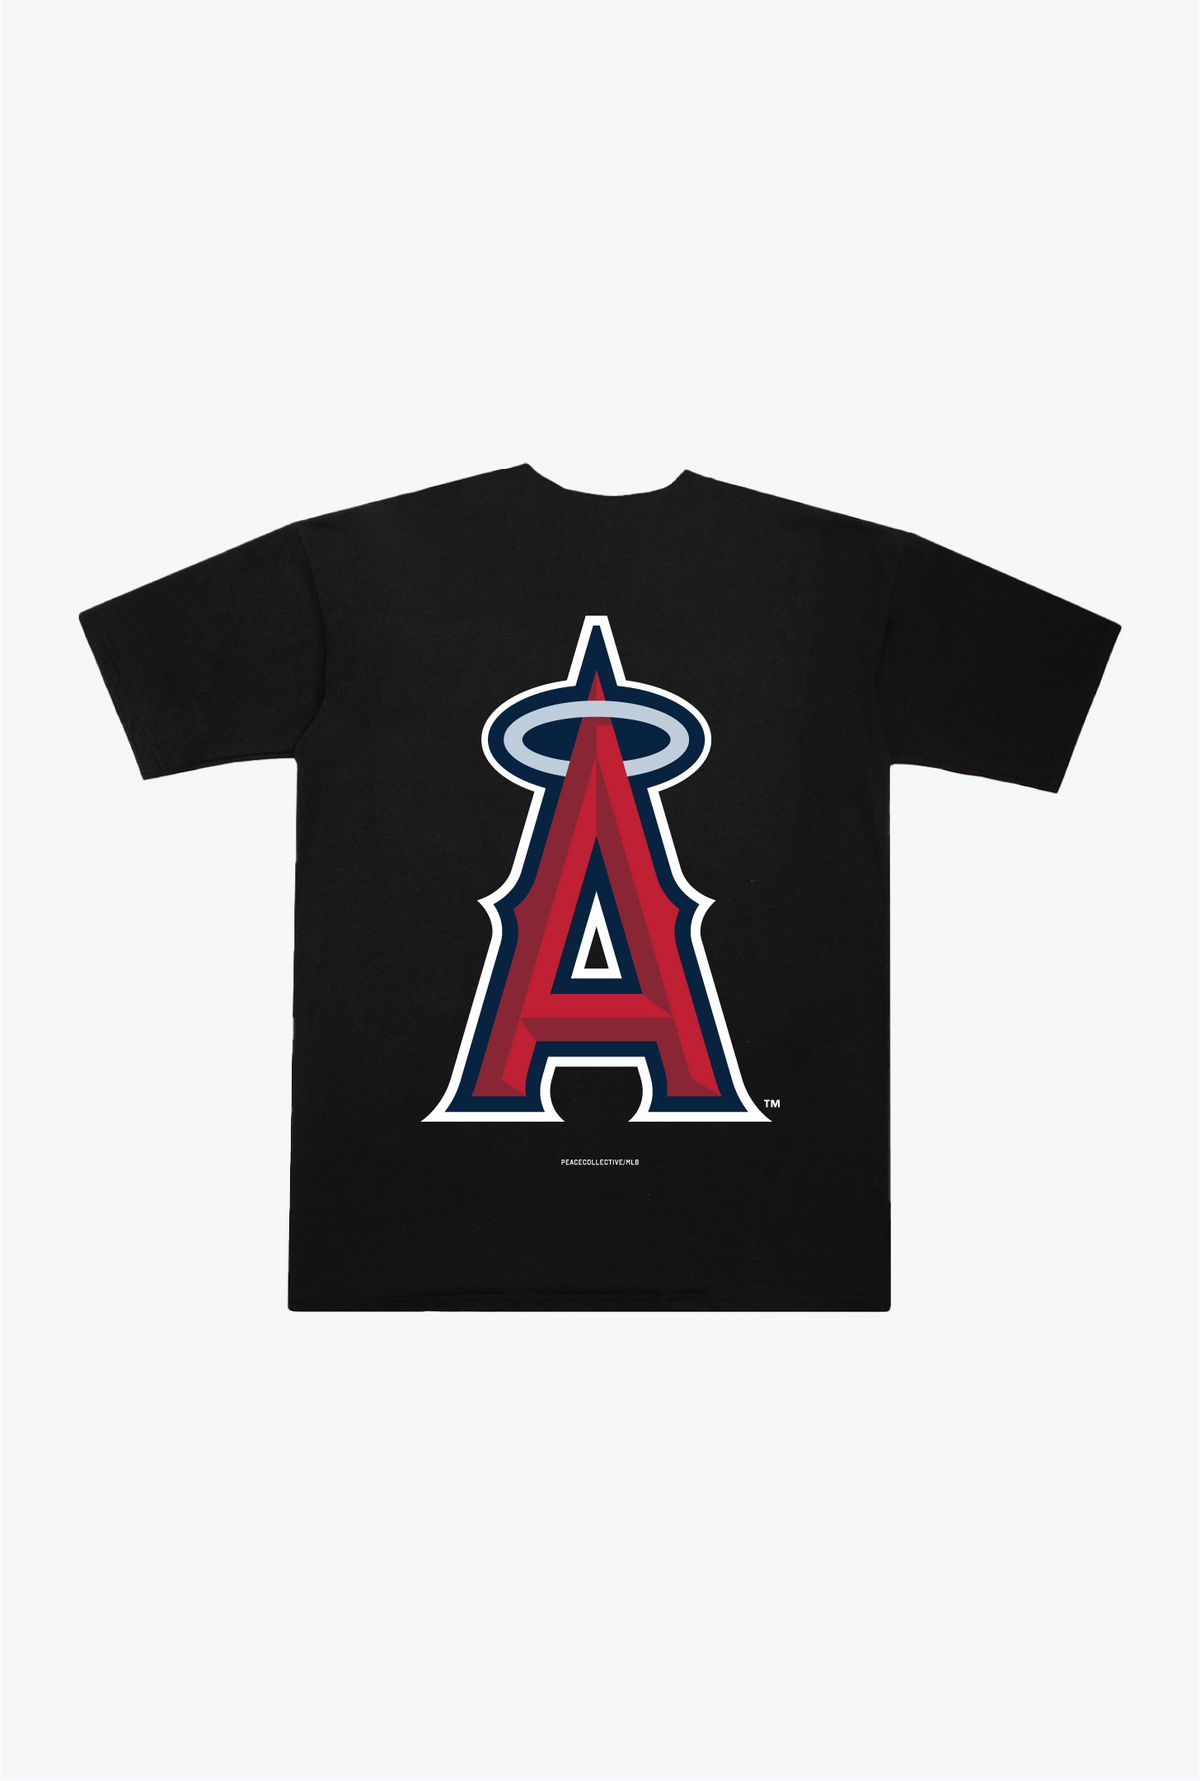 Los Angeles Angels Heavyweight T-Shirt - Black